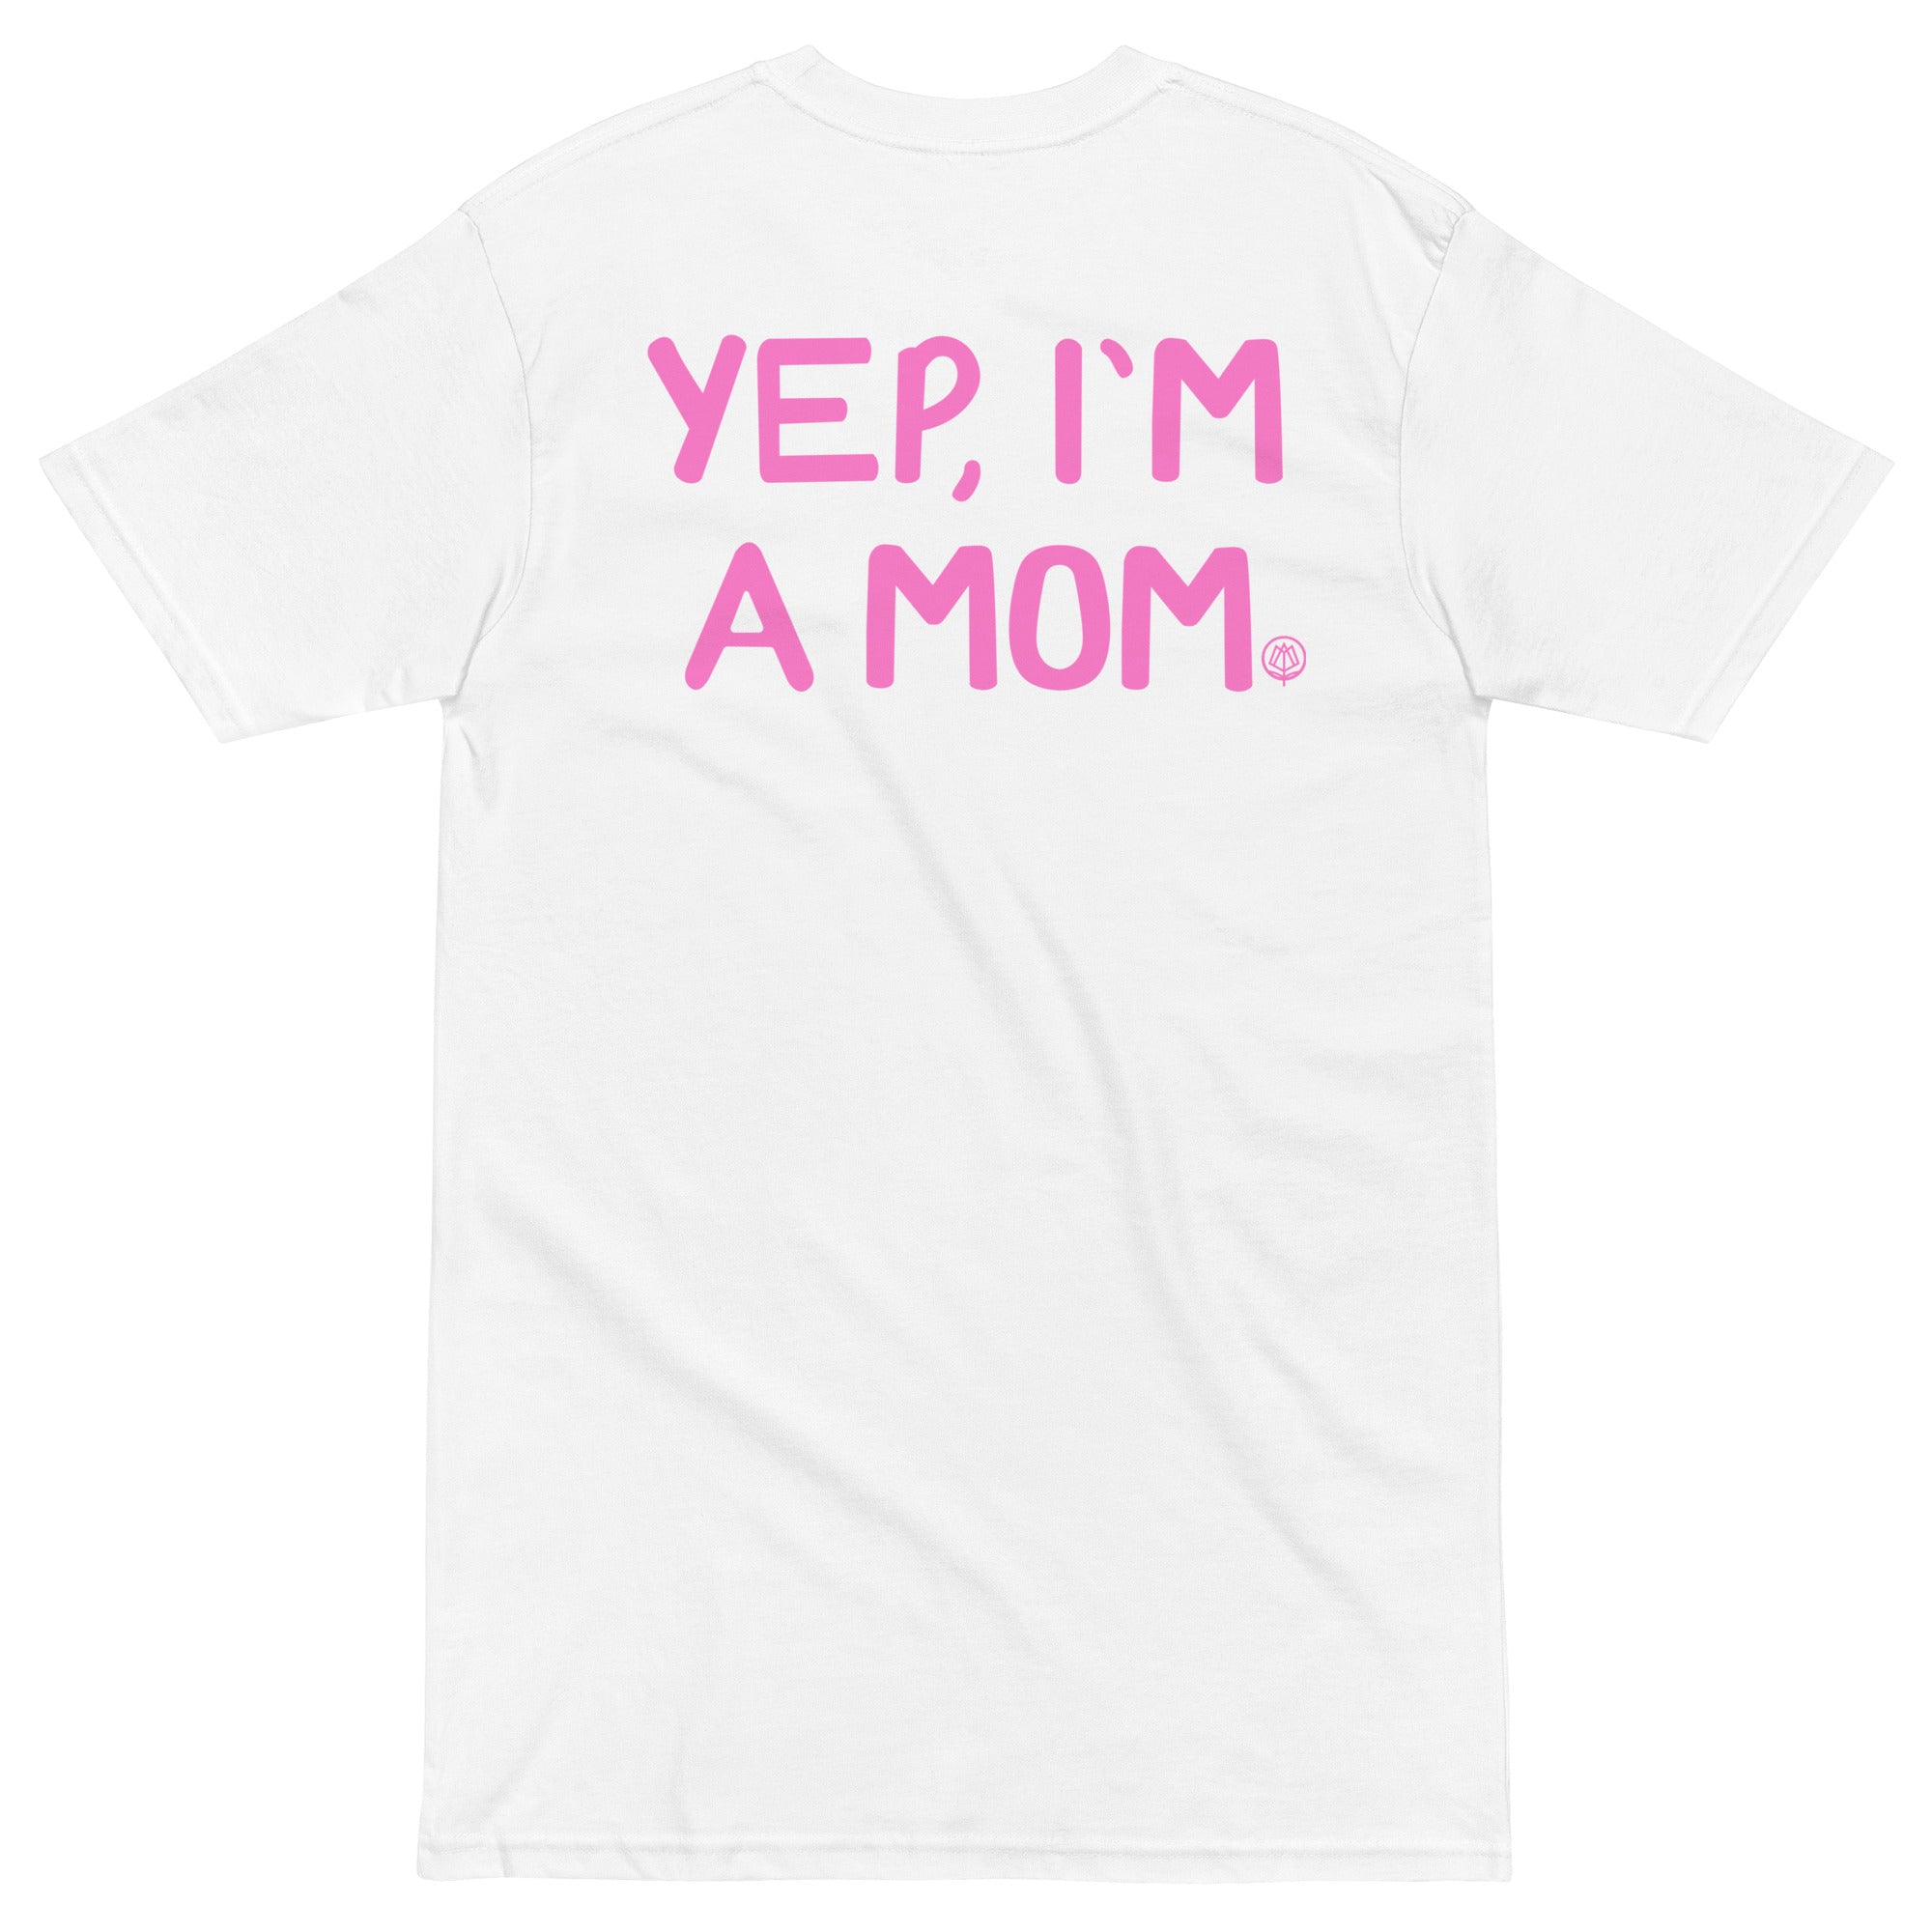 Yep, I'm A Mom Tee - Pink